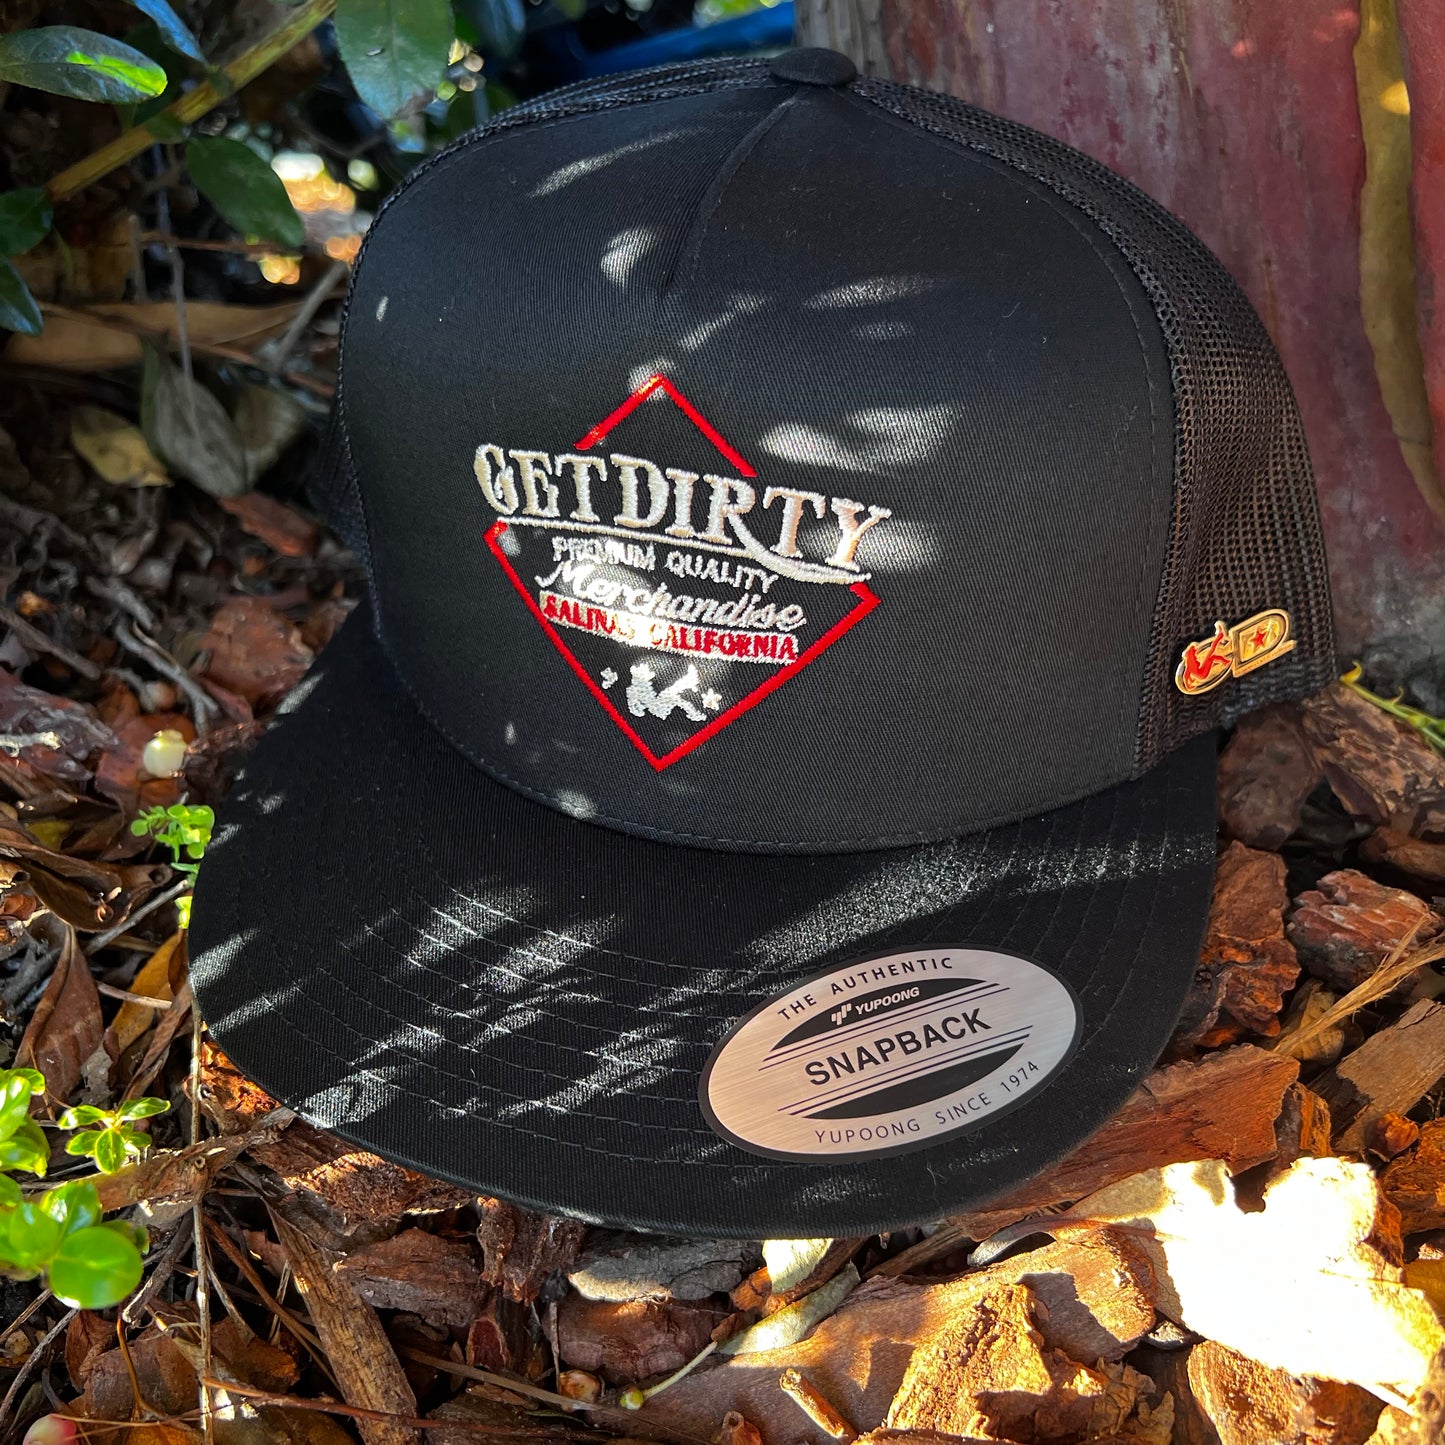 Get Dirty Merchandise RD/RG 505 Blk/Blk Trucker Hat